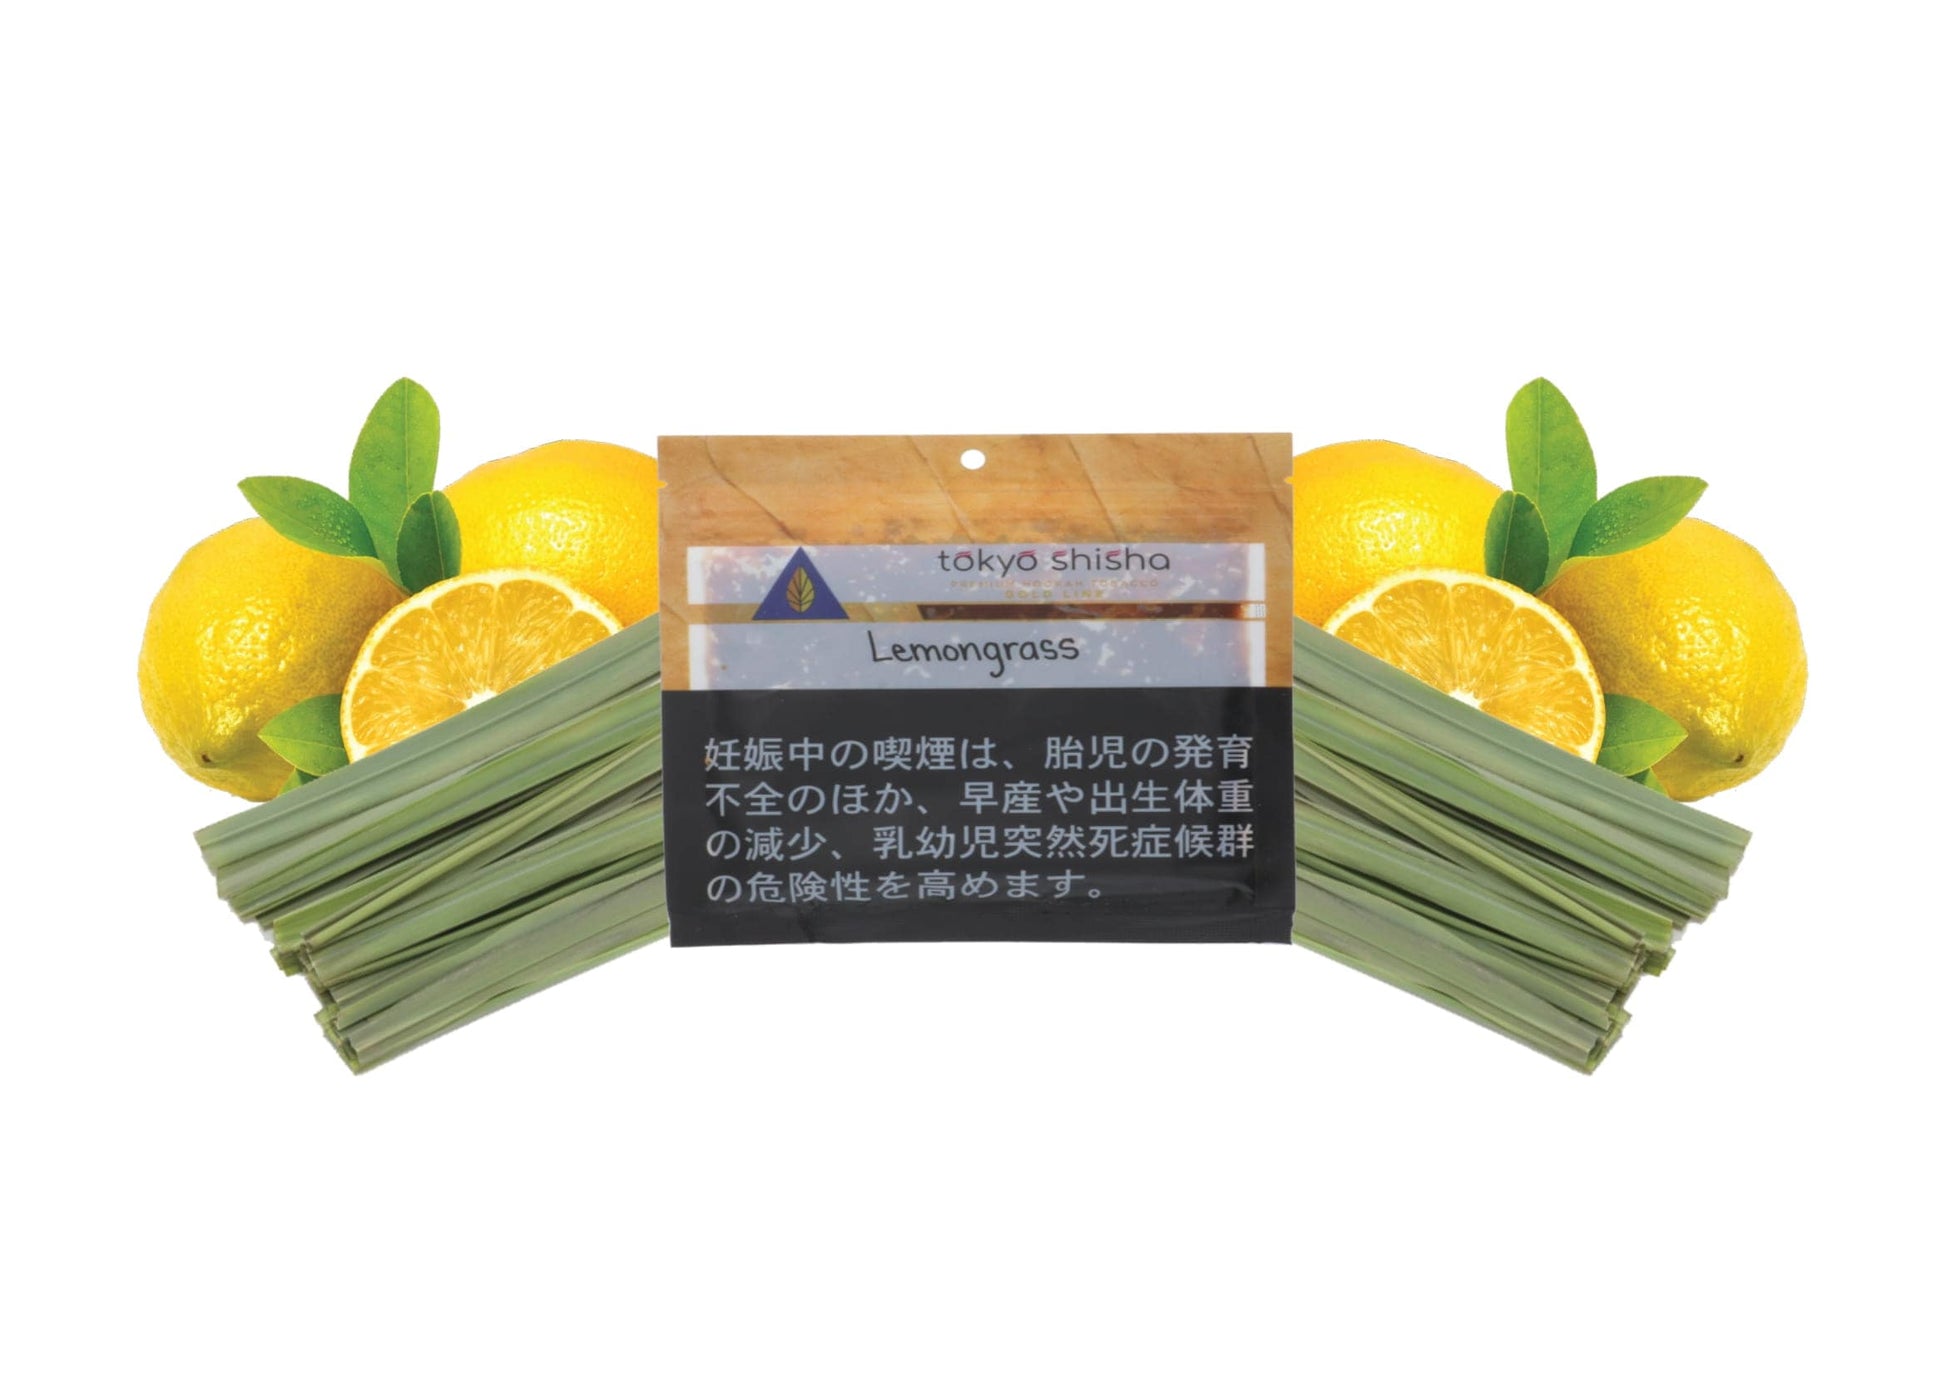 Lemongrass - 日本最大級のシーシャ・水タバコの通販サイト| ブクブクSHOP